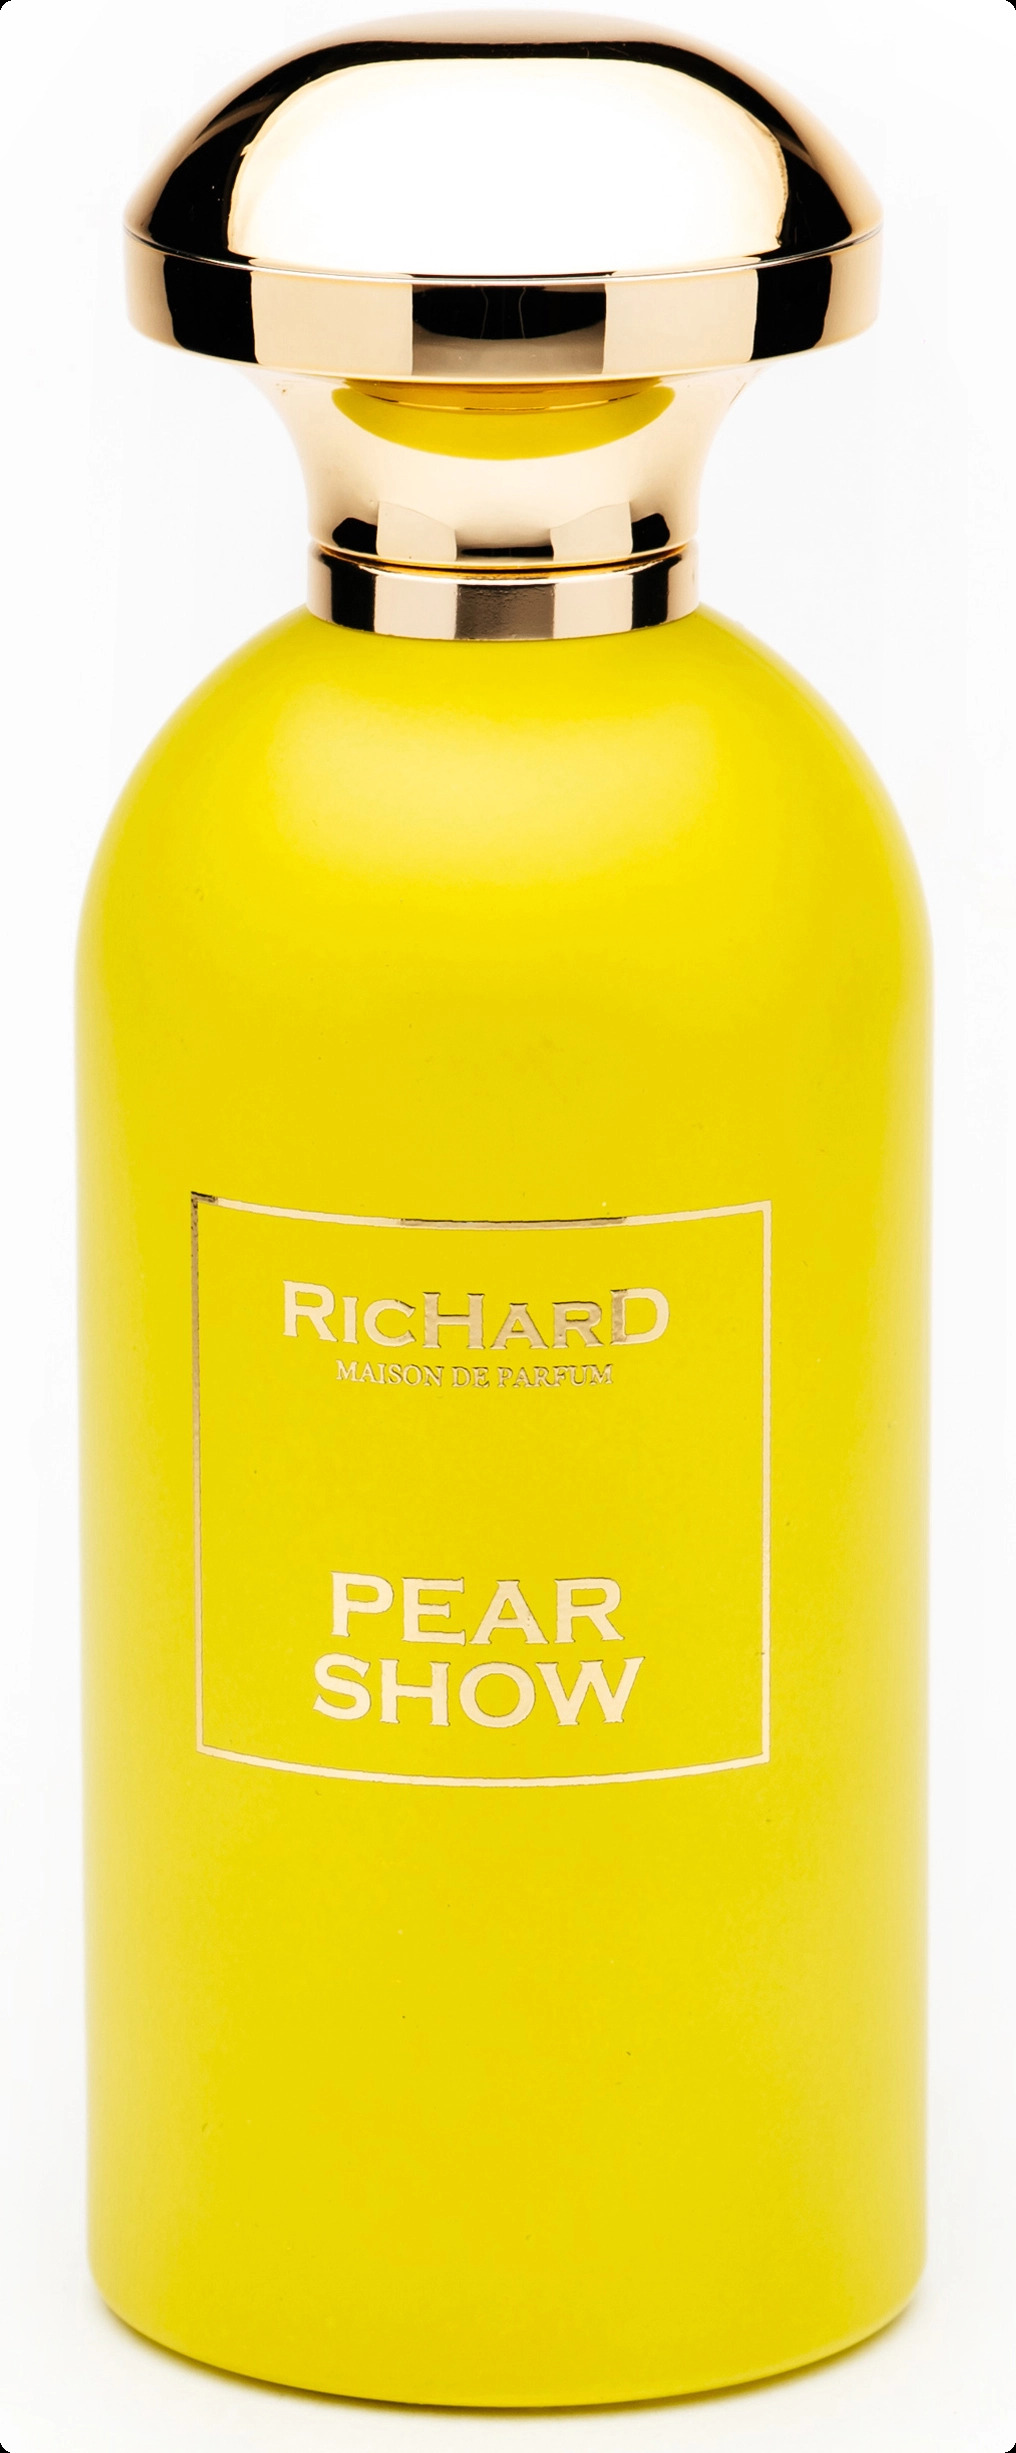 Ричард Пеар шоу для женщин и мужчин